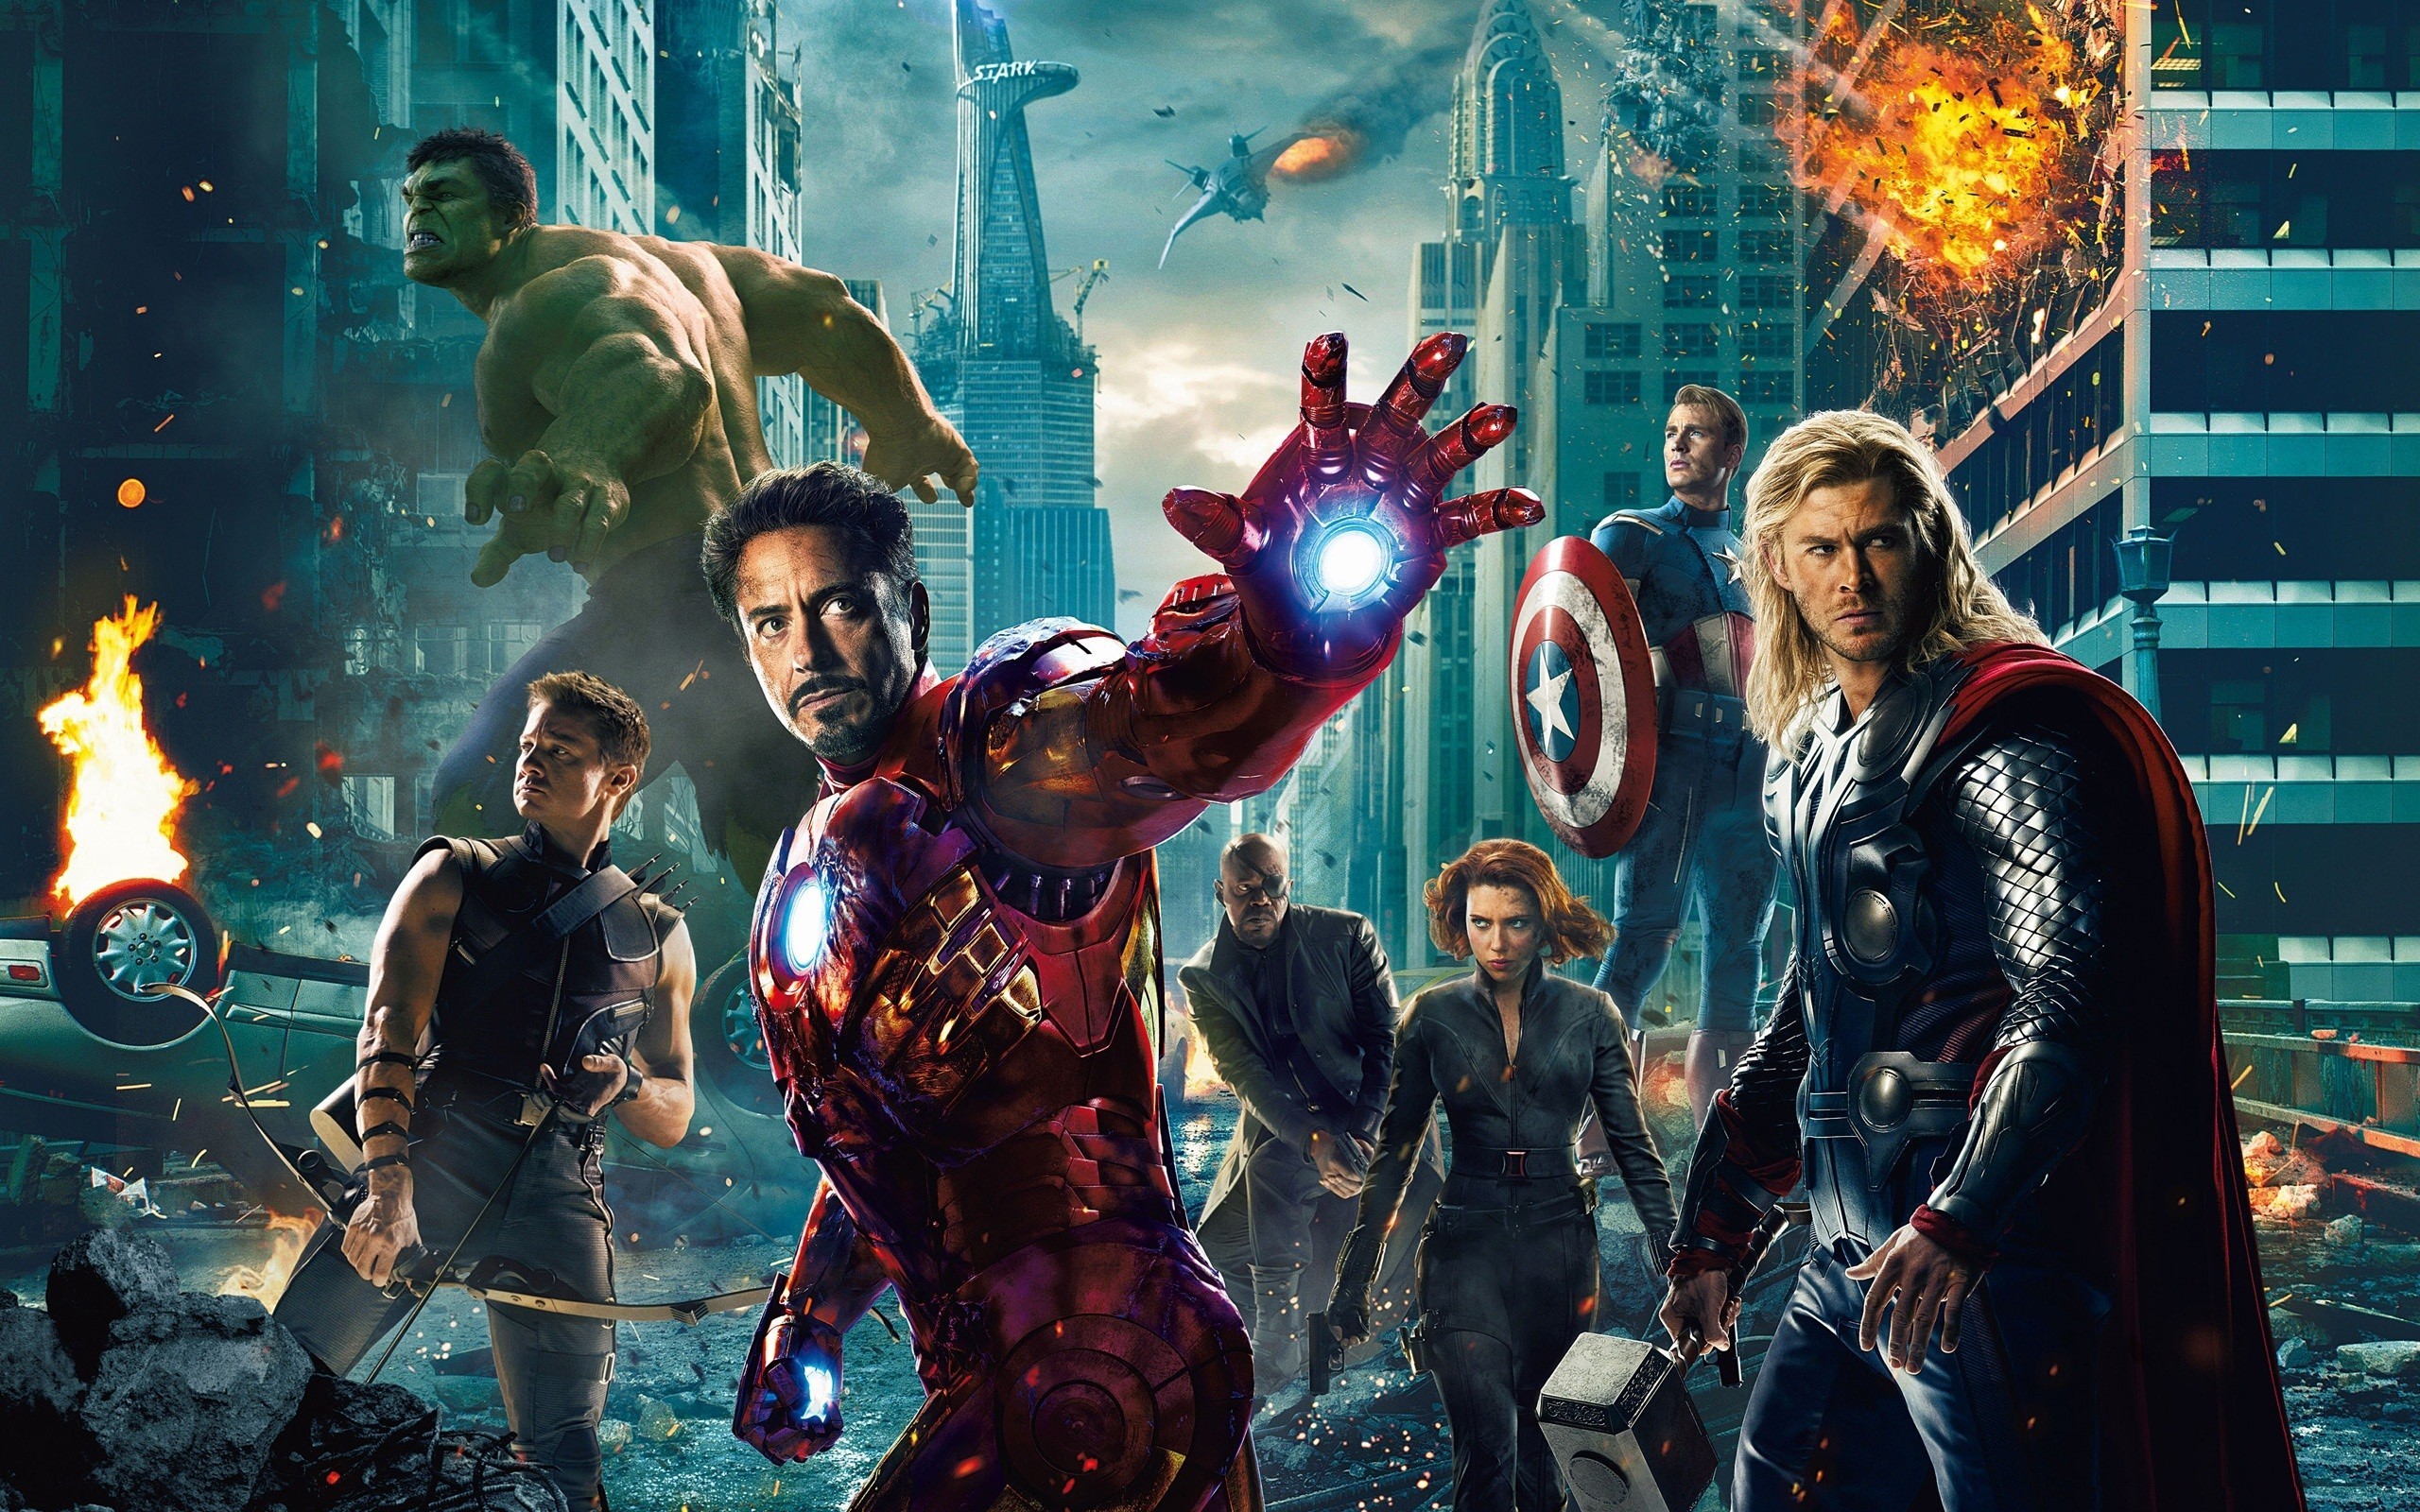 General 2560x1600 The Avengers Hawkeye Iron Man Hulk Black Widow Captain America Thor Nick Fury Scarlett Johansson gun movies Marvel Cinematic Universe digital art